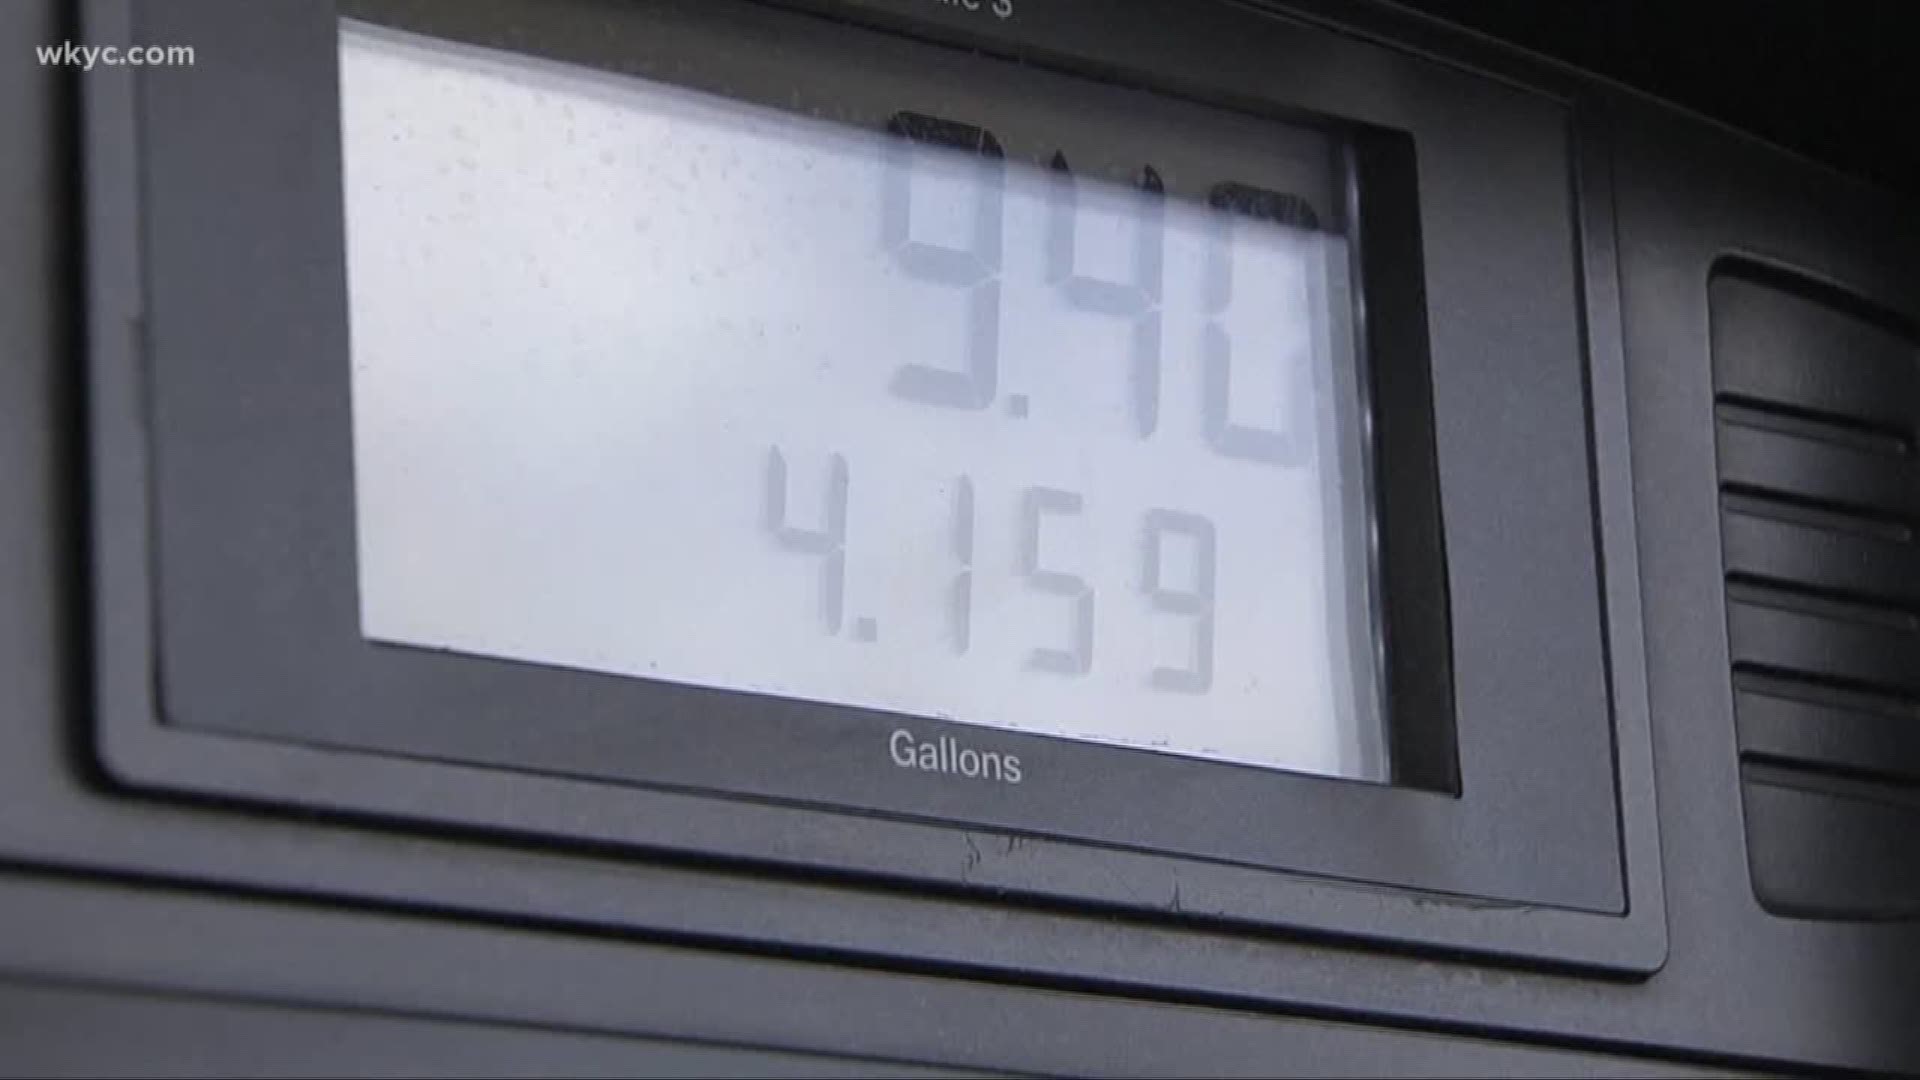 Should Ohio raise the tax on gas?